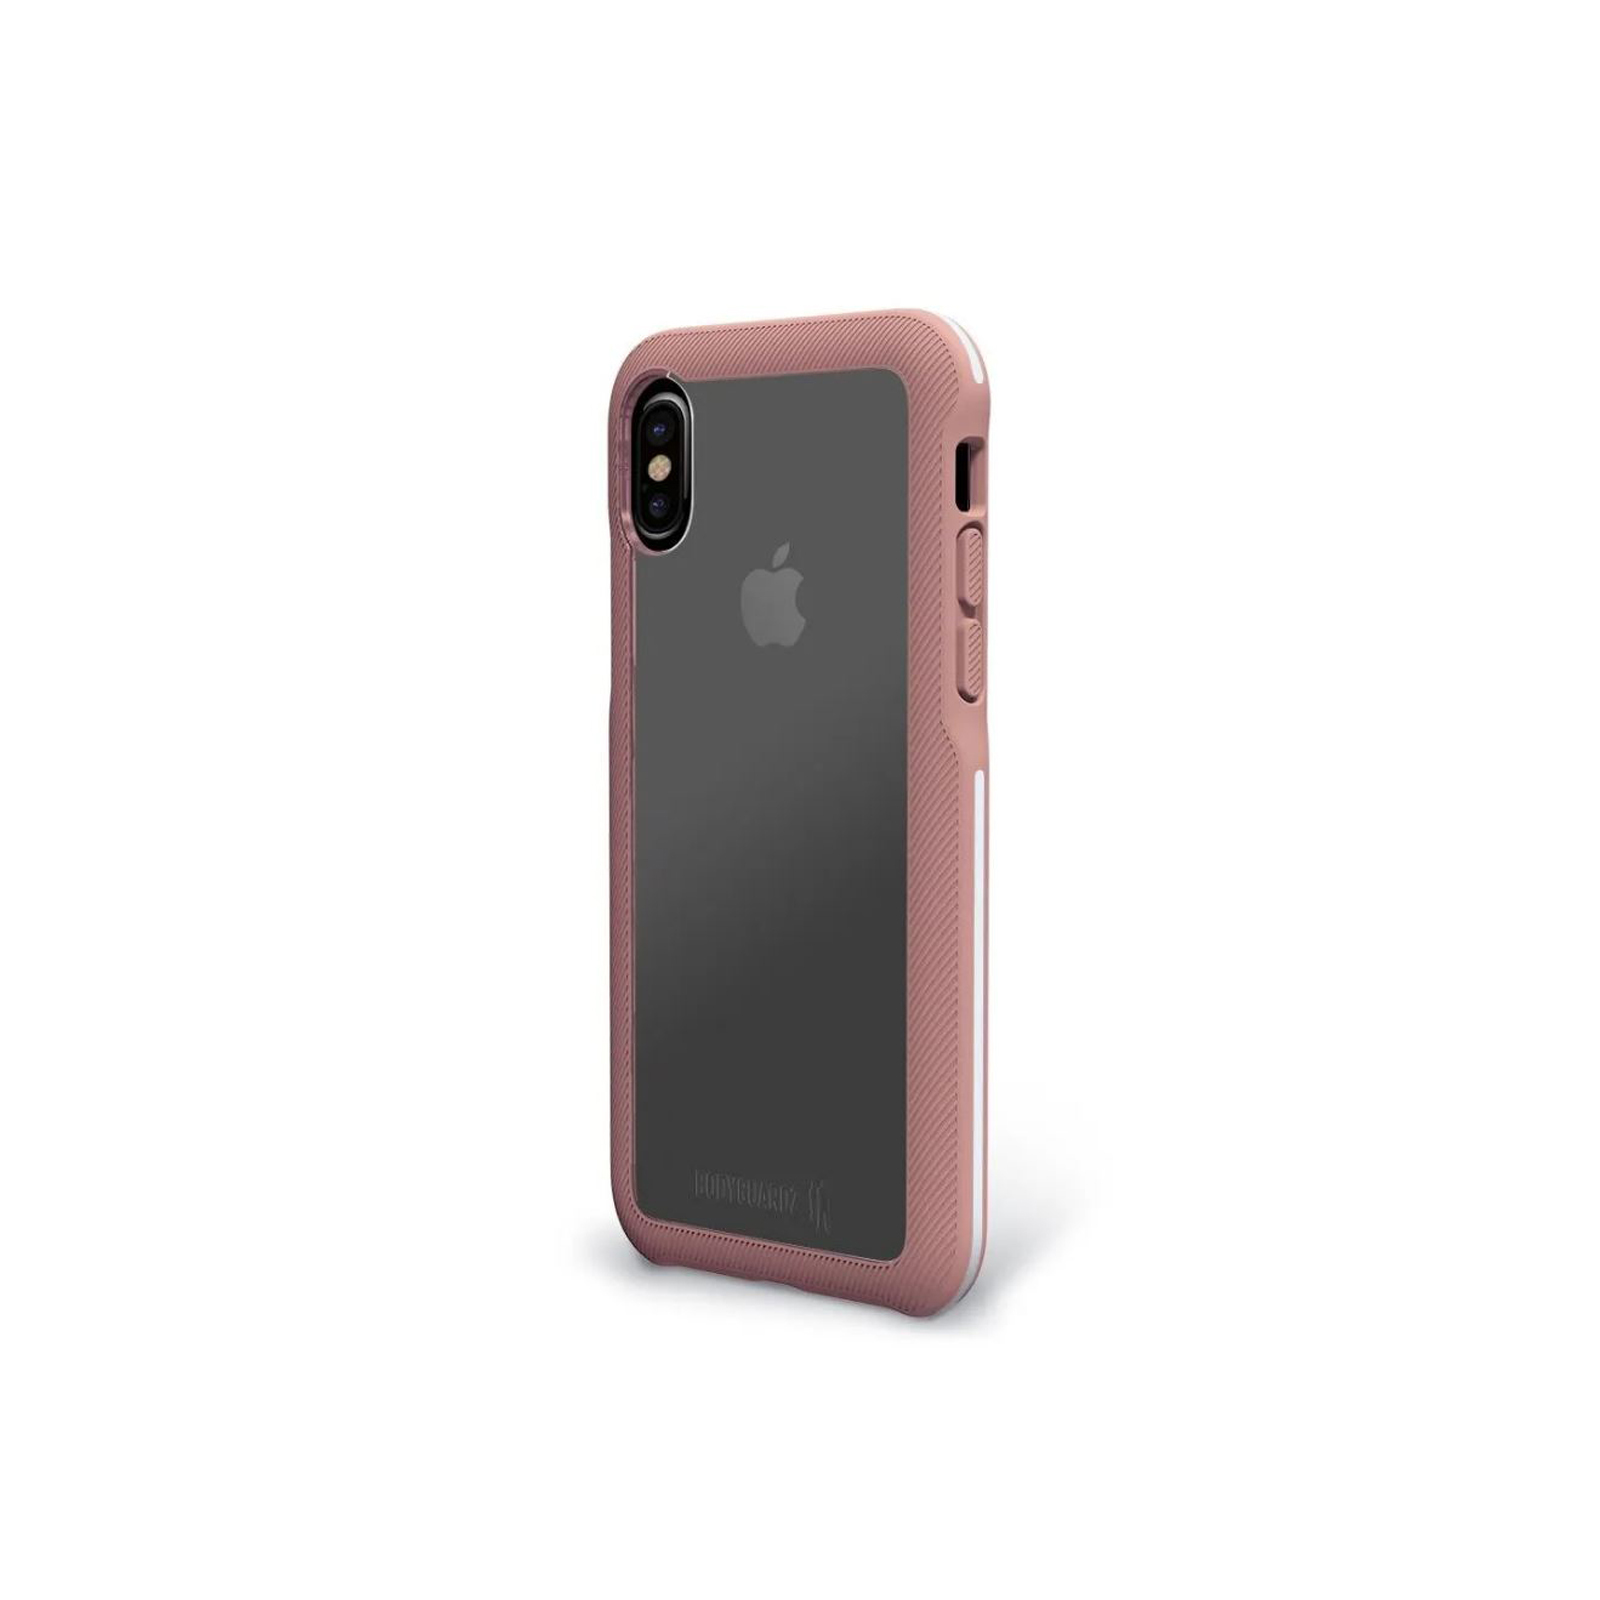 Trainr iPhone X / XS Rose / White Case Brand New